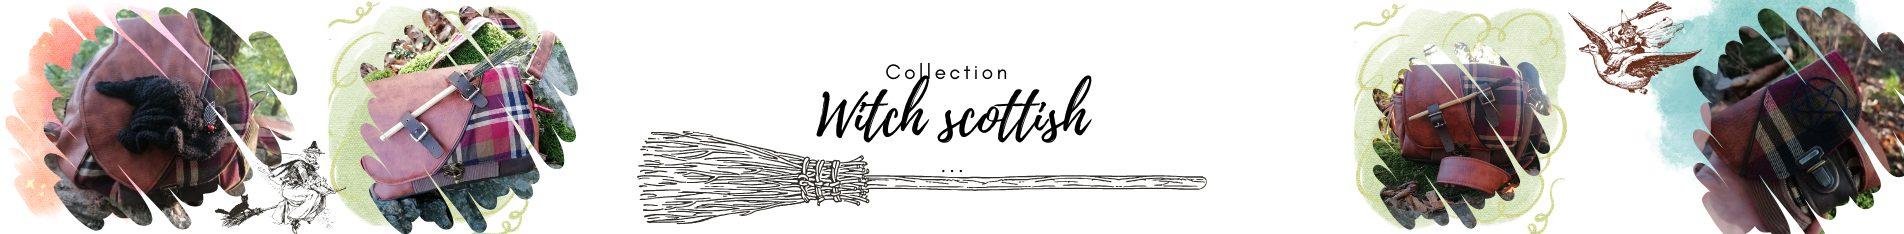 Witch Scottish, magic